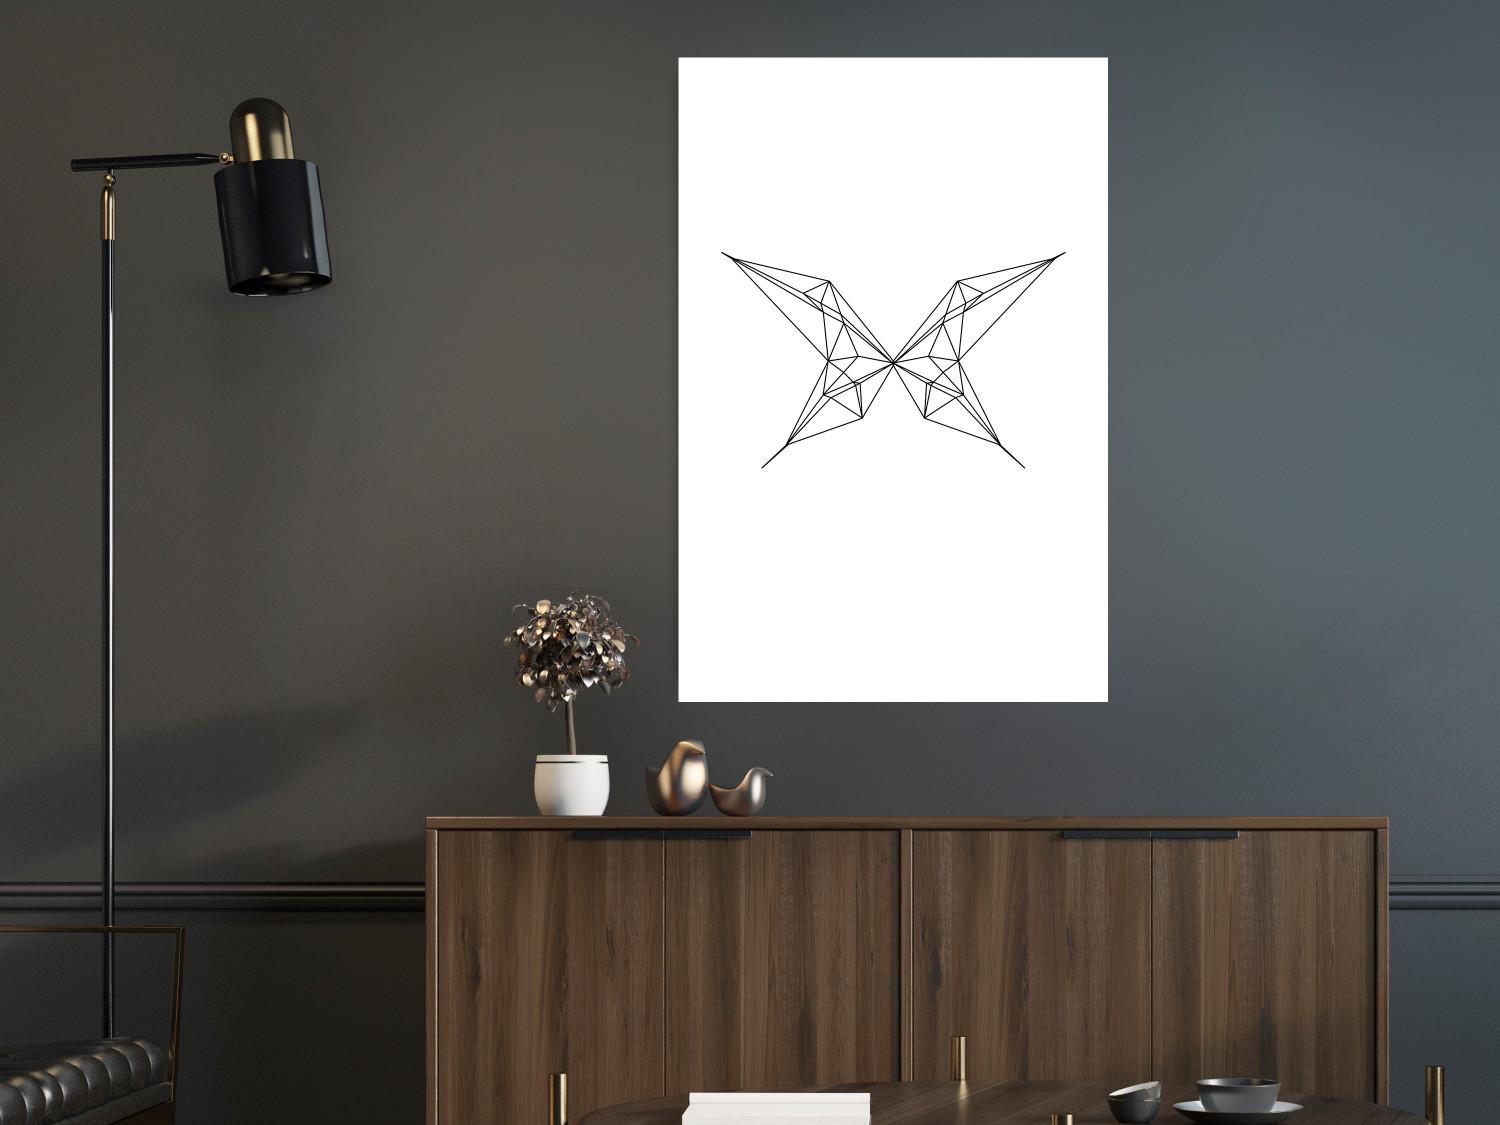 Poster Dibujo de mariposa - line art abstracto de mariposa